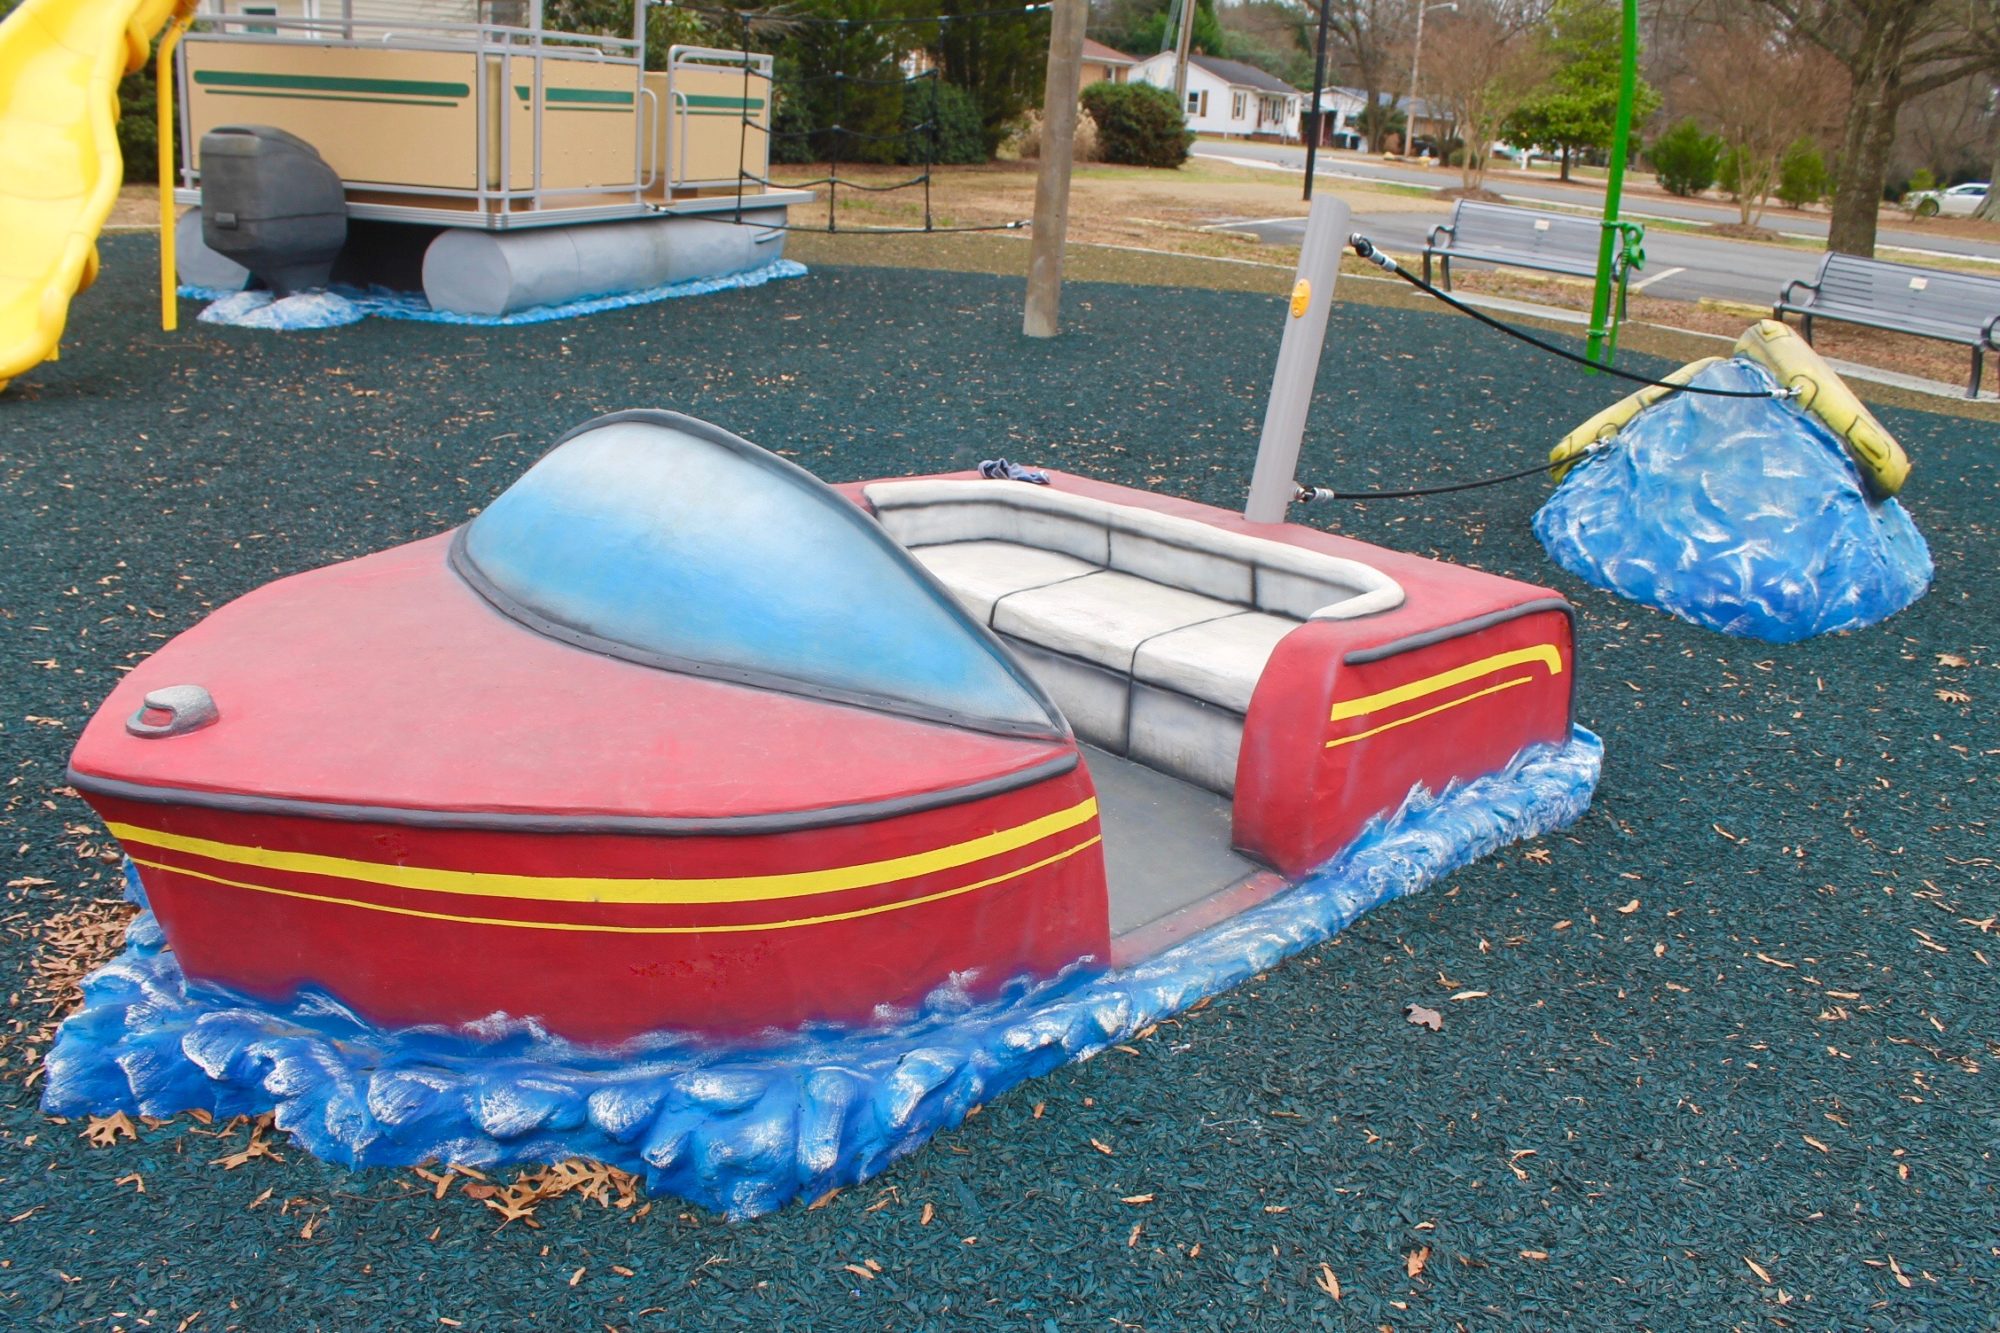 Smithville Park Playground